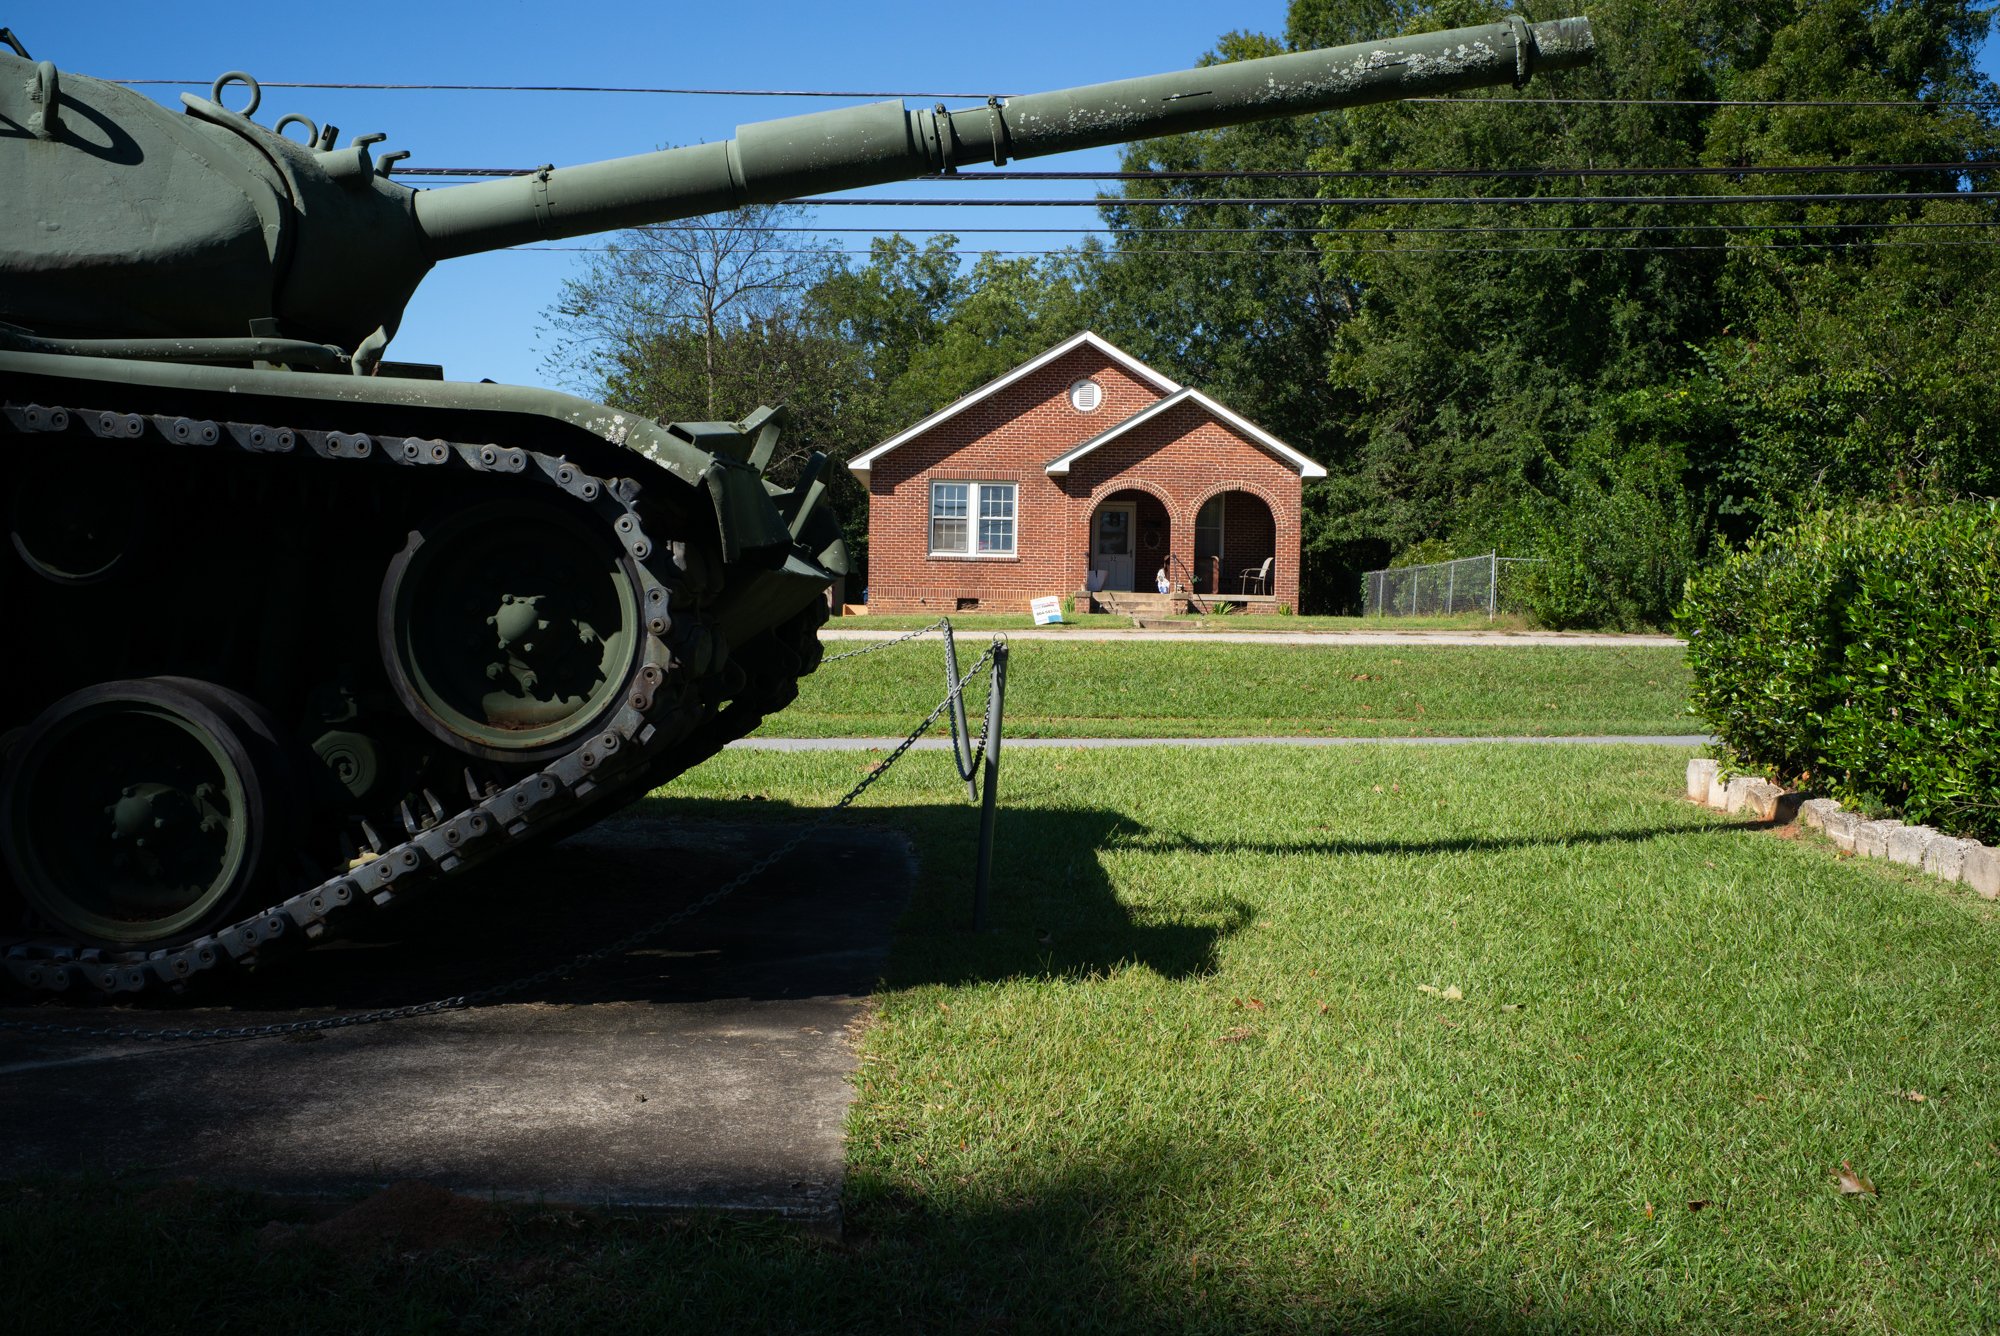 Tank, Ninety Six, South Carolina